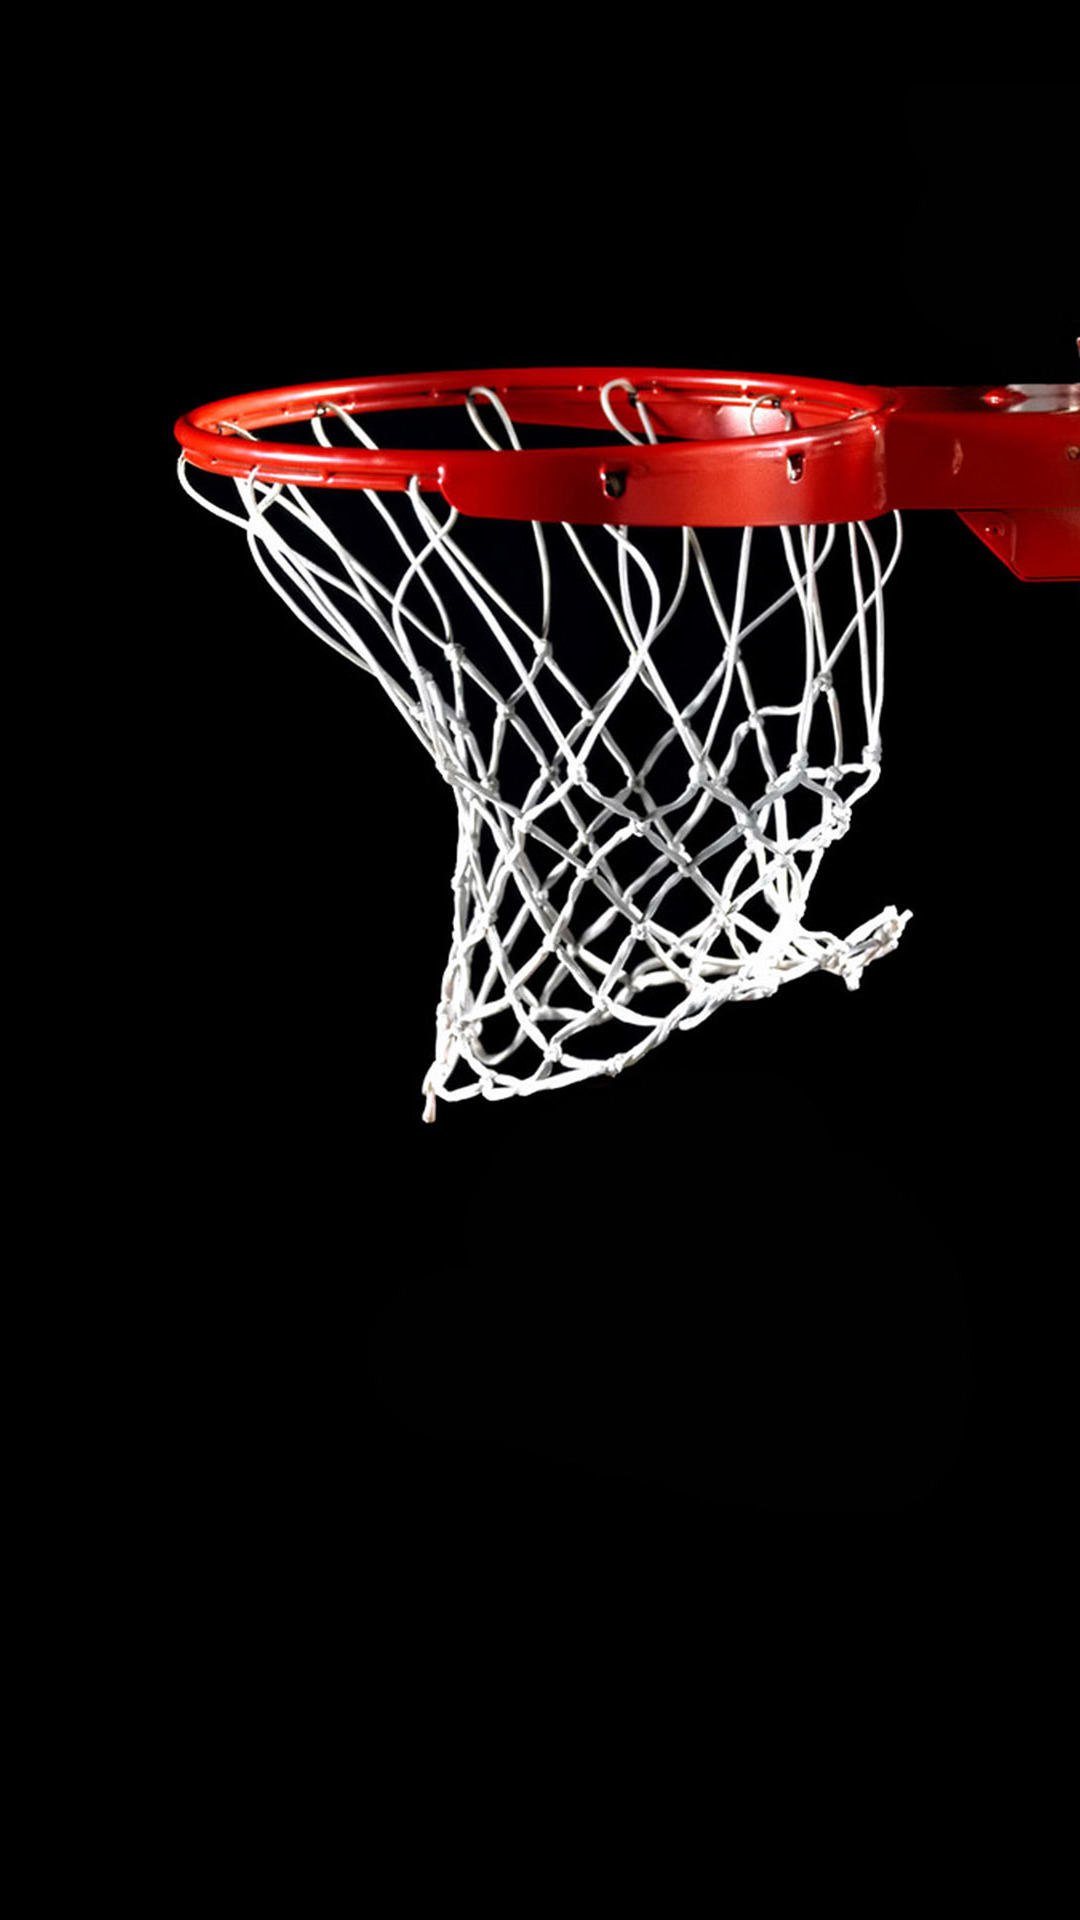 Download wallpaper 800x1200 basketball court basketball court hoop  autumn iphone 4s4 for parallax hd background